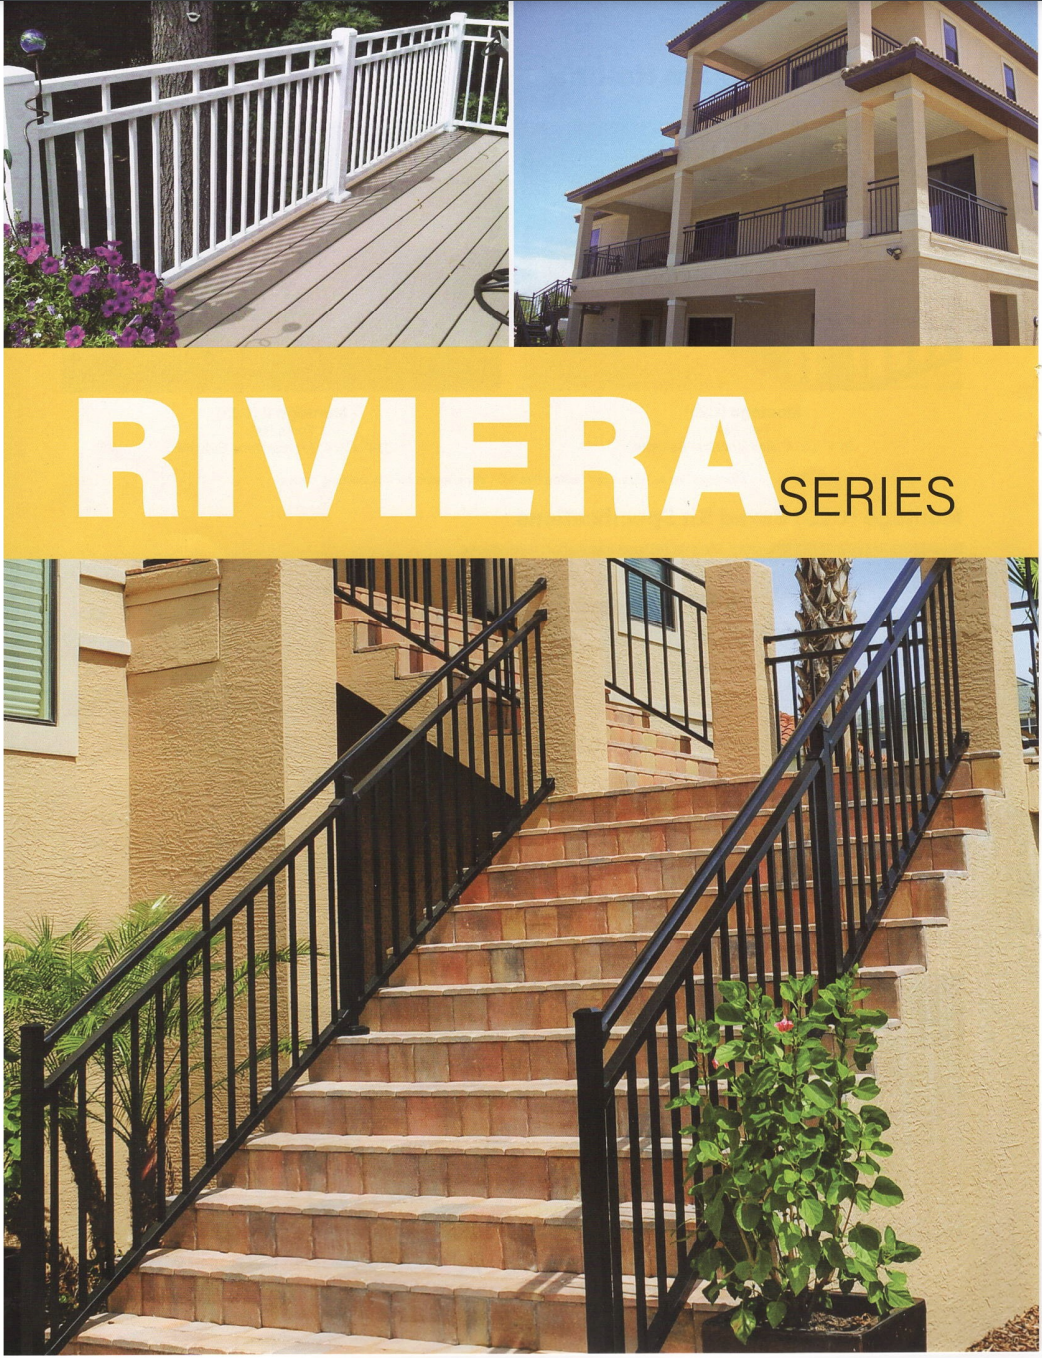 Westbury Riviera series railings